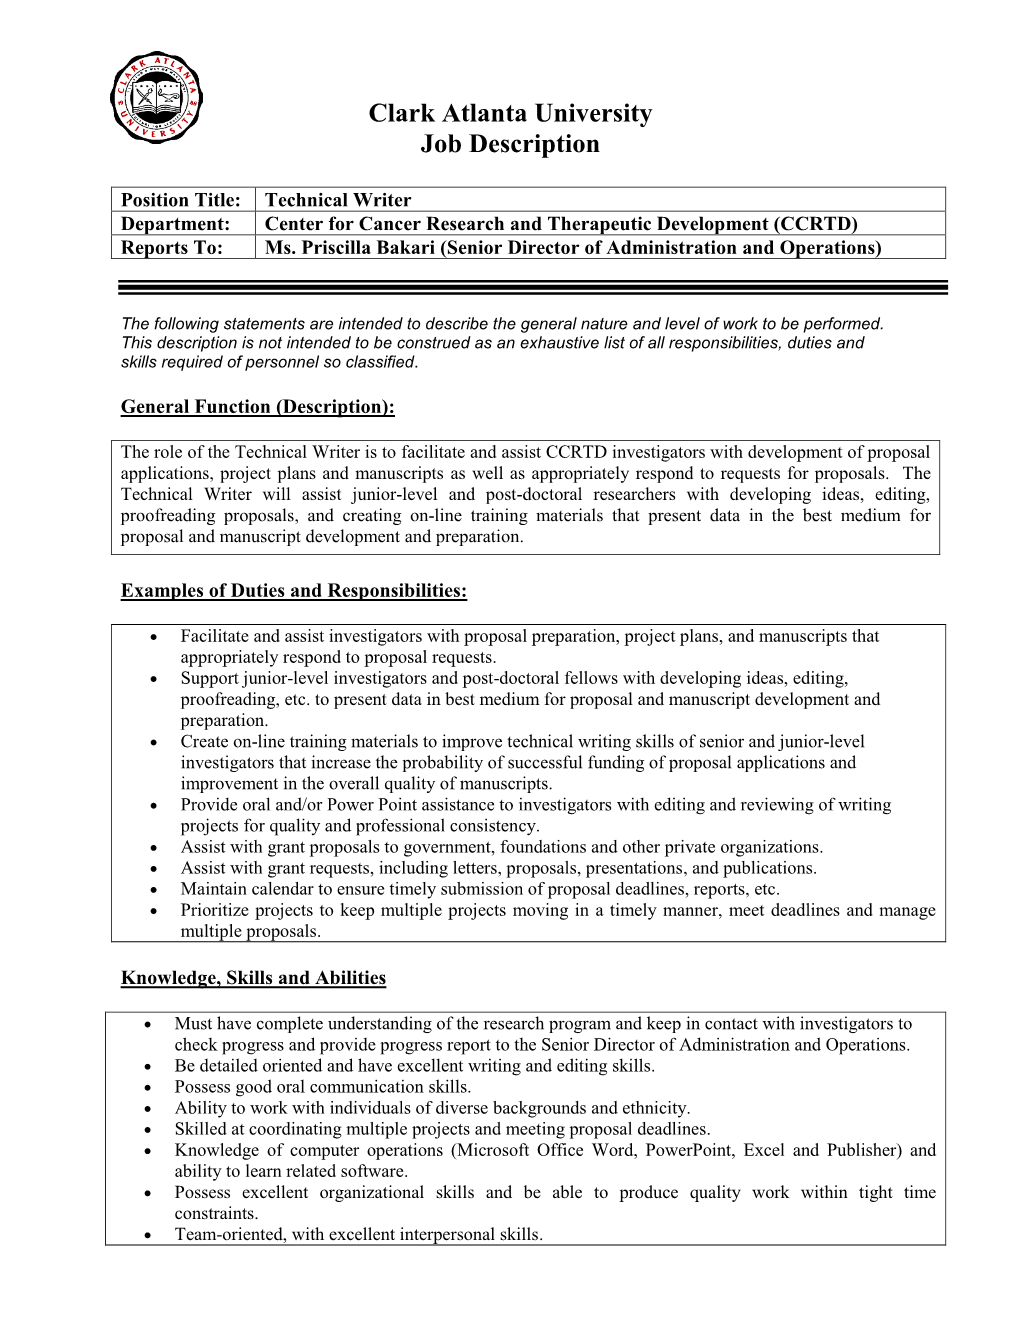 Clark Atlanta University Job Description